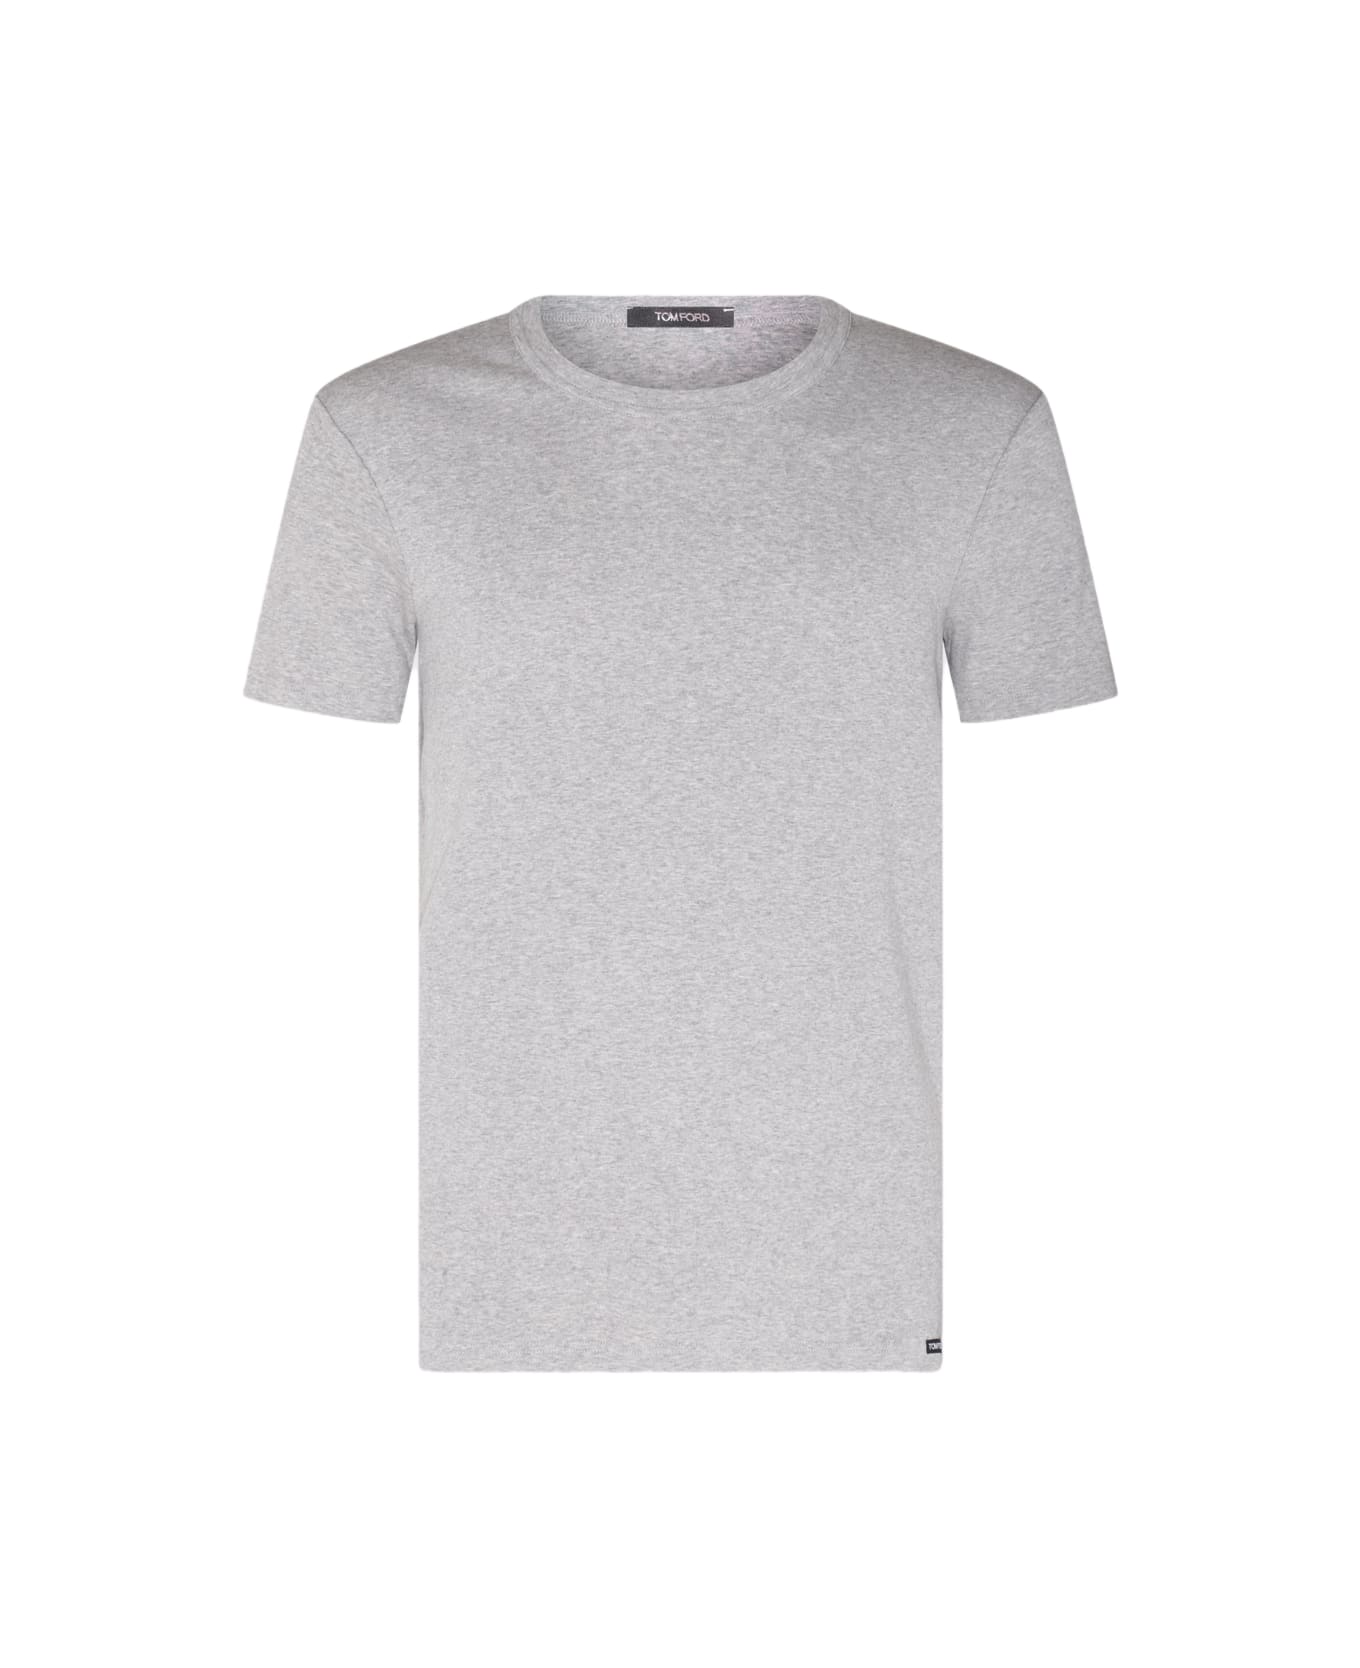 Tom Ford Grey Cotton T-shirt - Grey シャツ